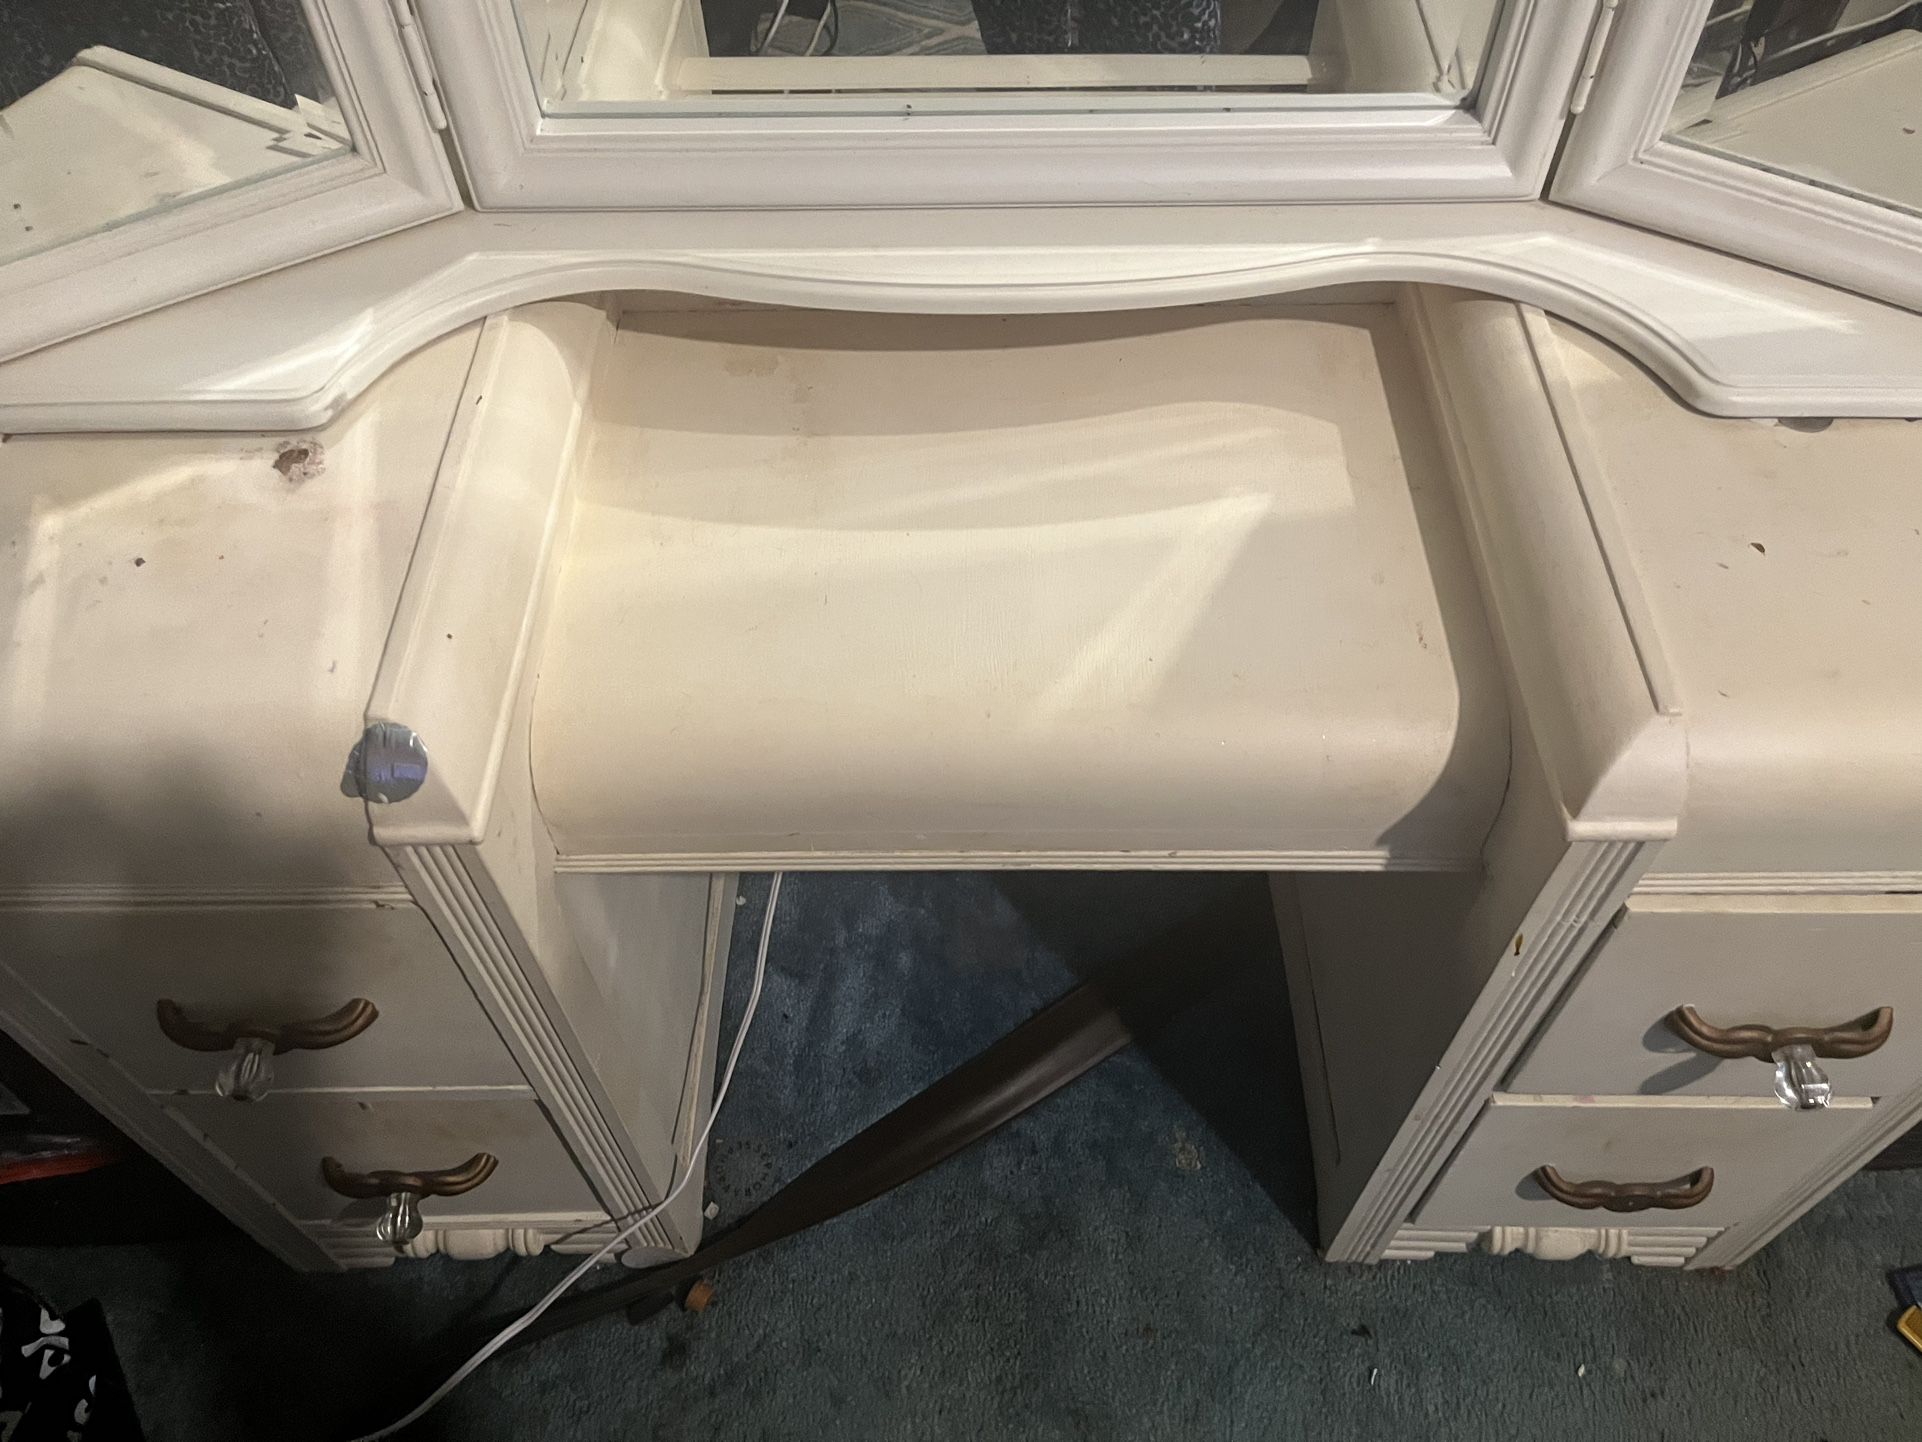 antoinetta vanity dresser with mirror white